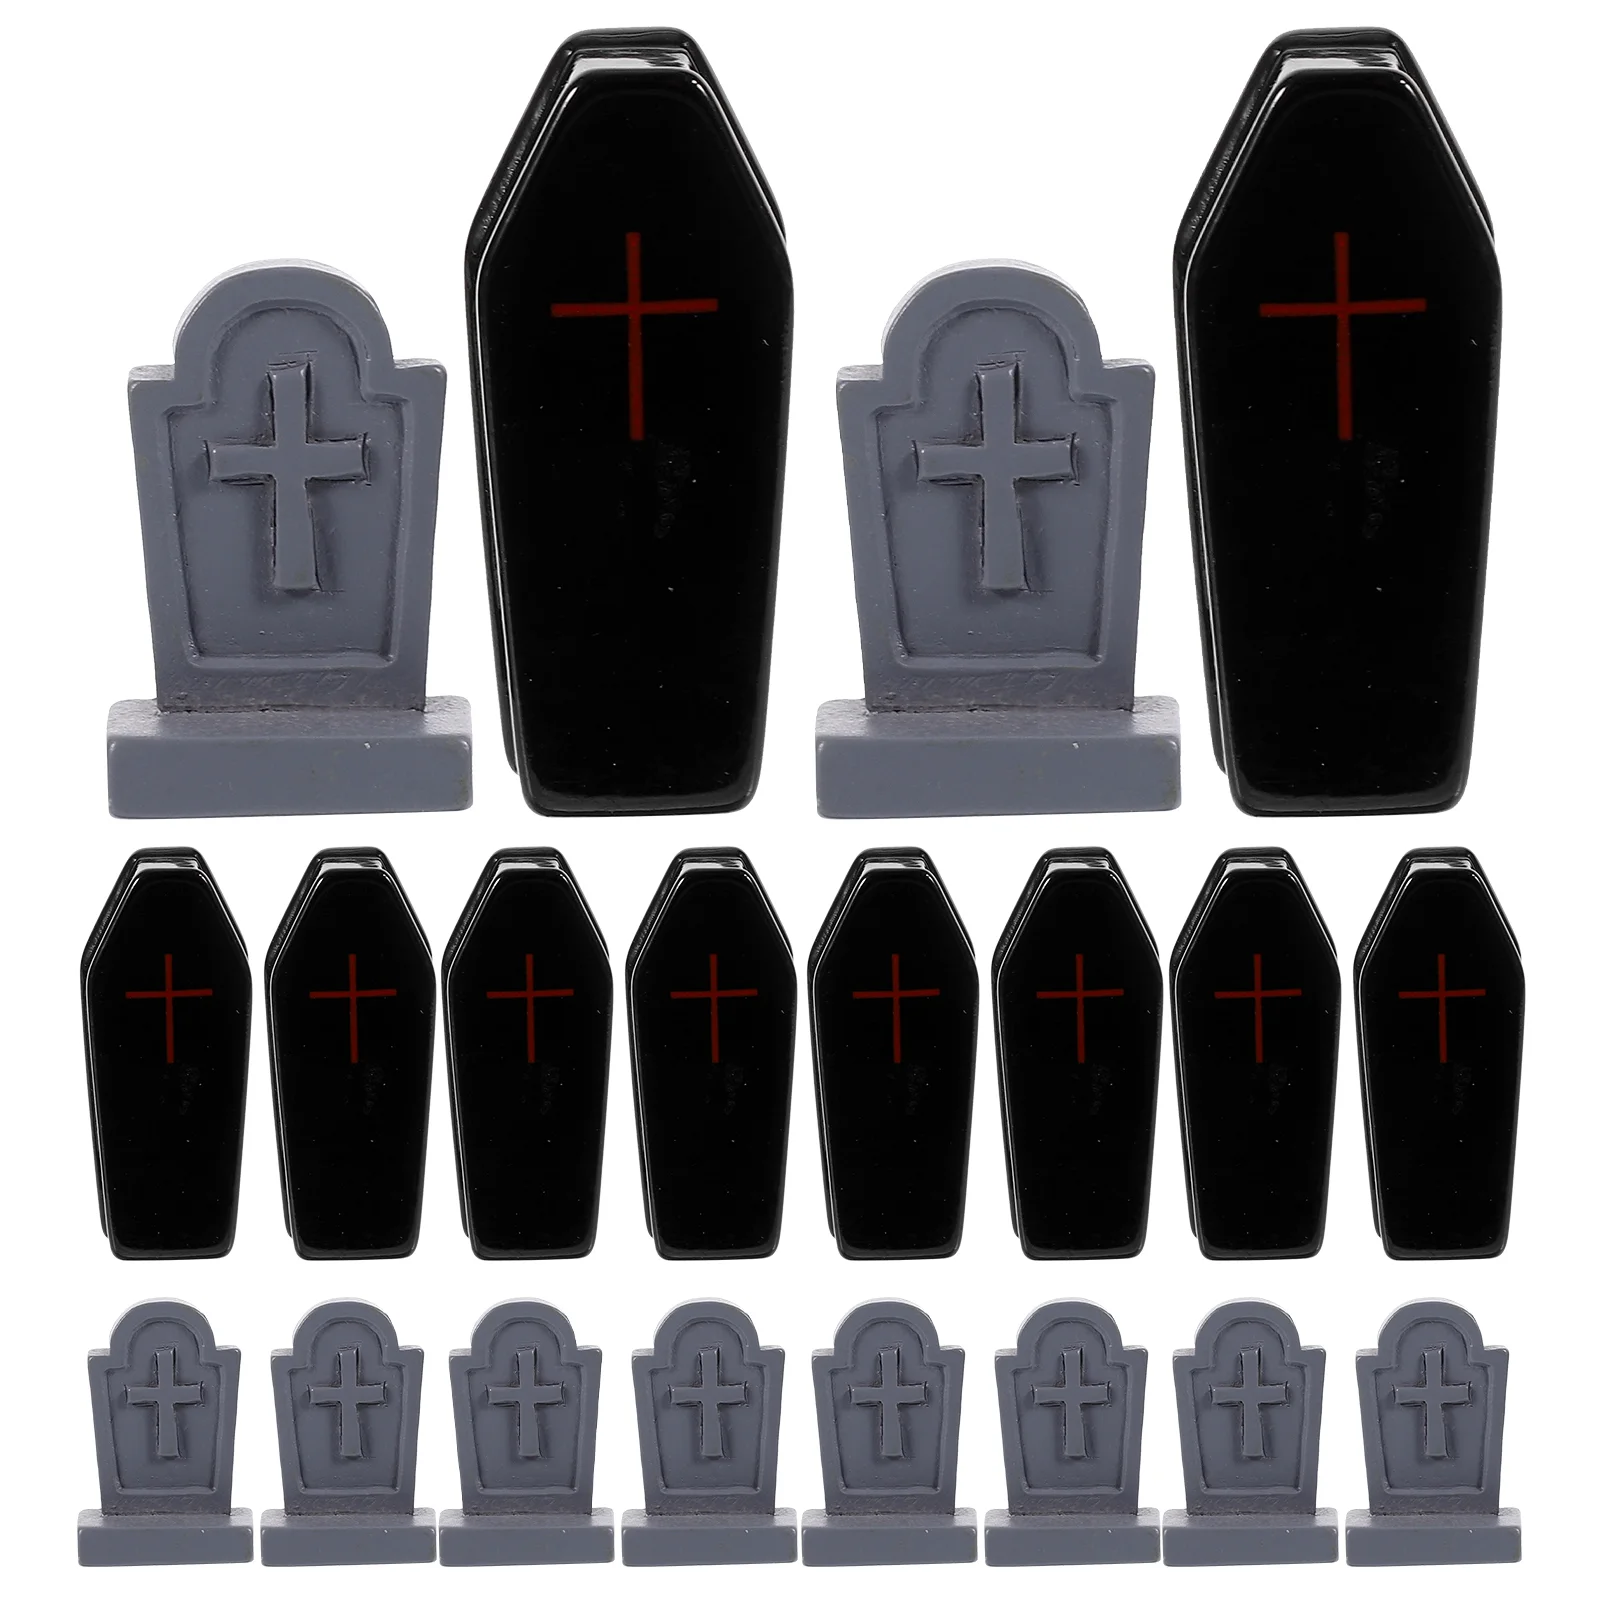 

20 Pcs Halloween Ornaments Grave Stone Decorations Cemetery Stones Resin Decors Graveyard Prank Prop Party Miniature Coffin